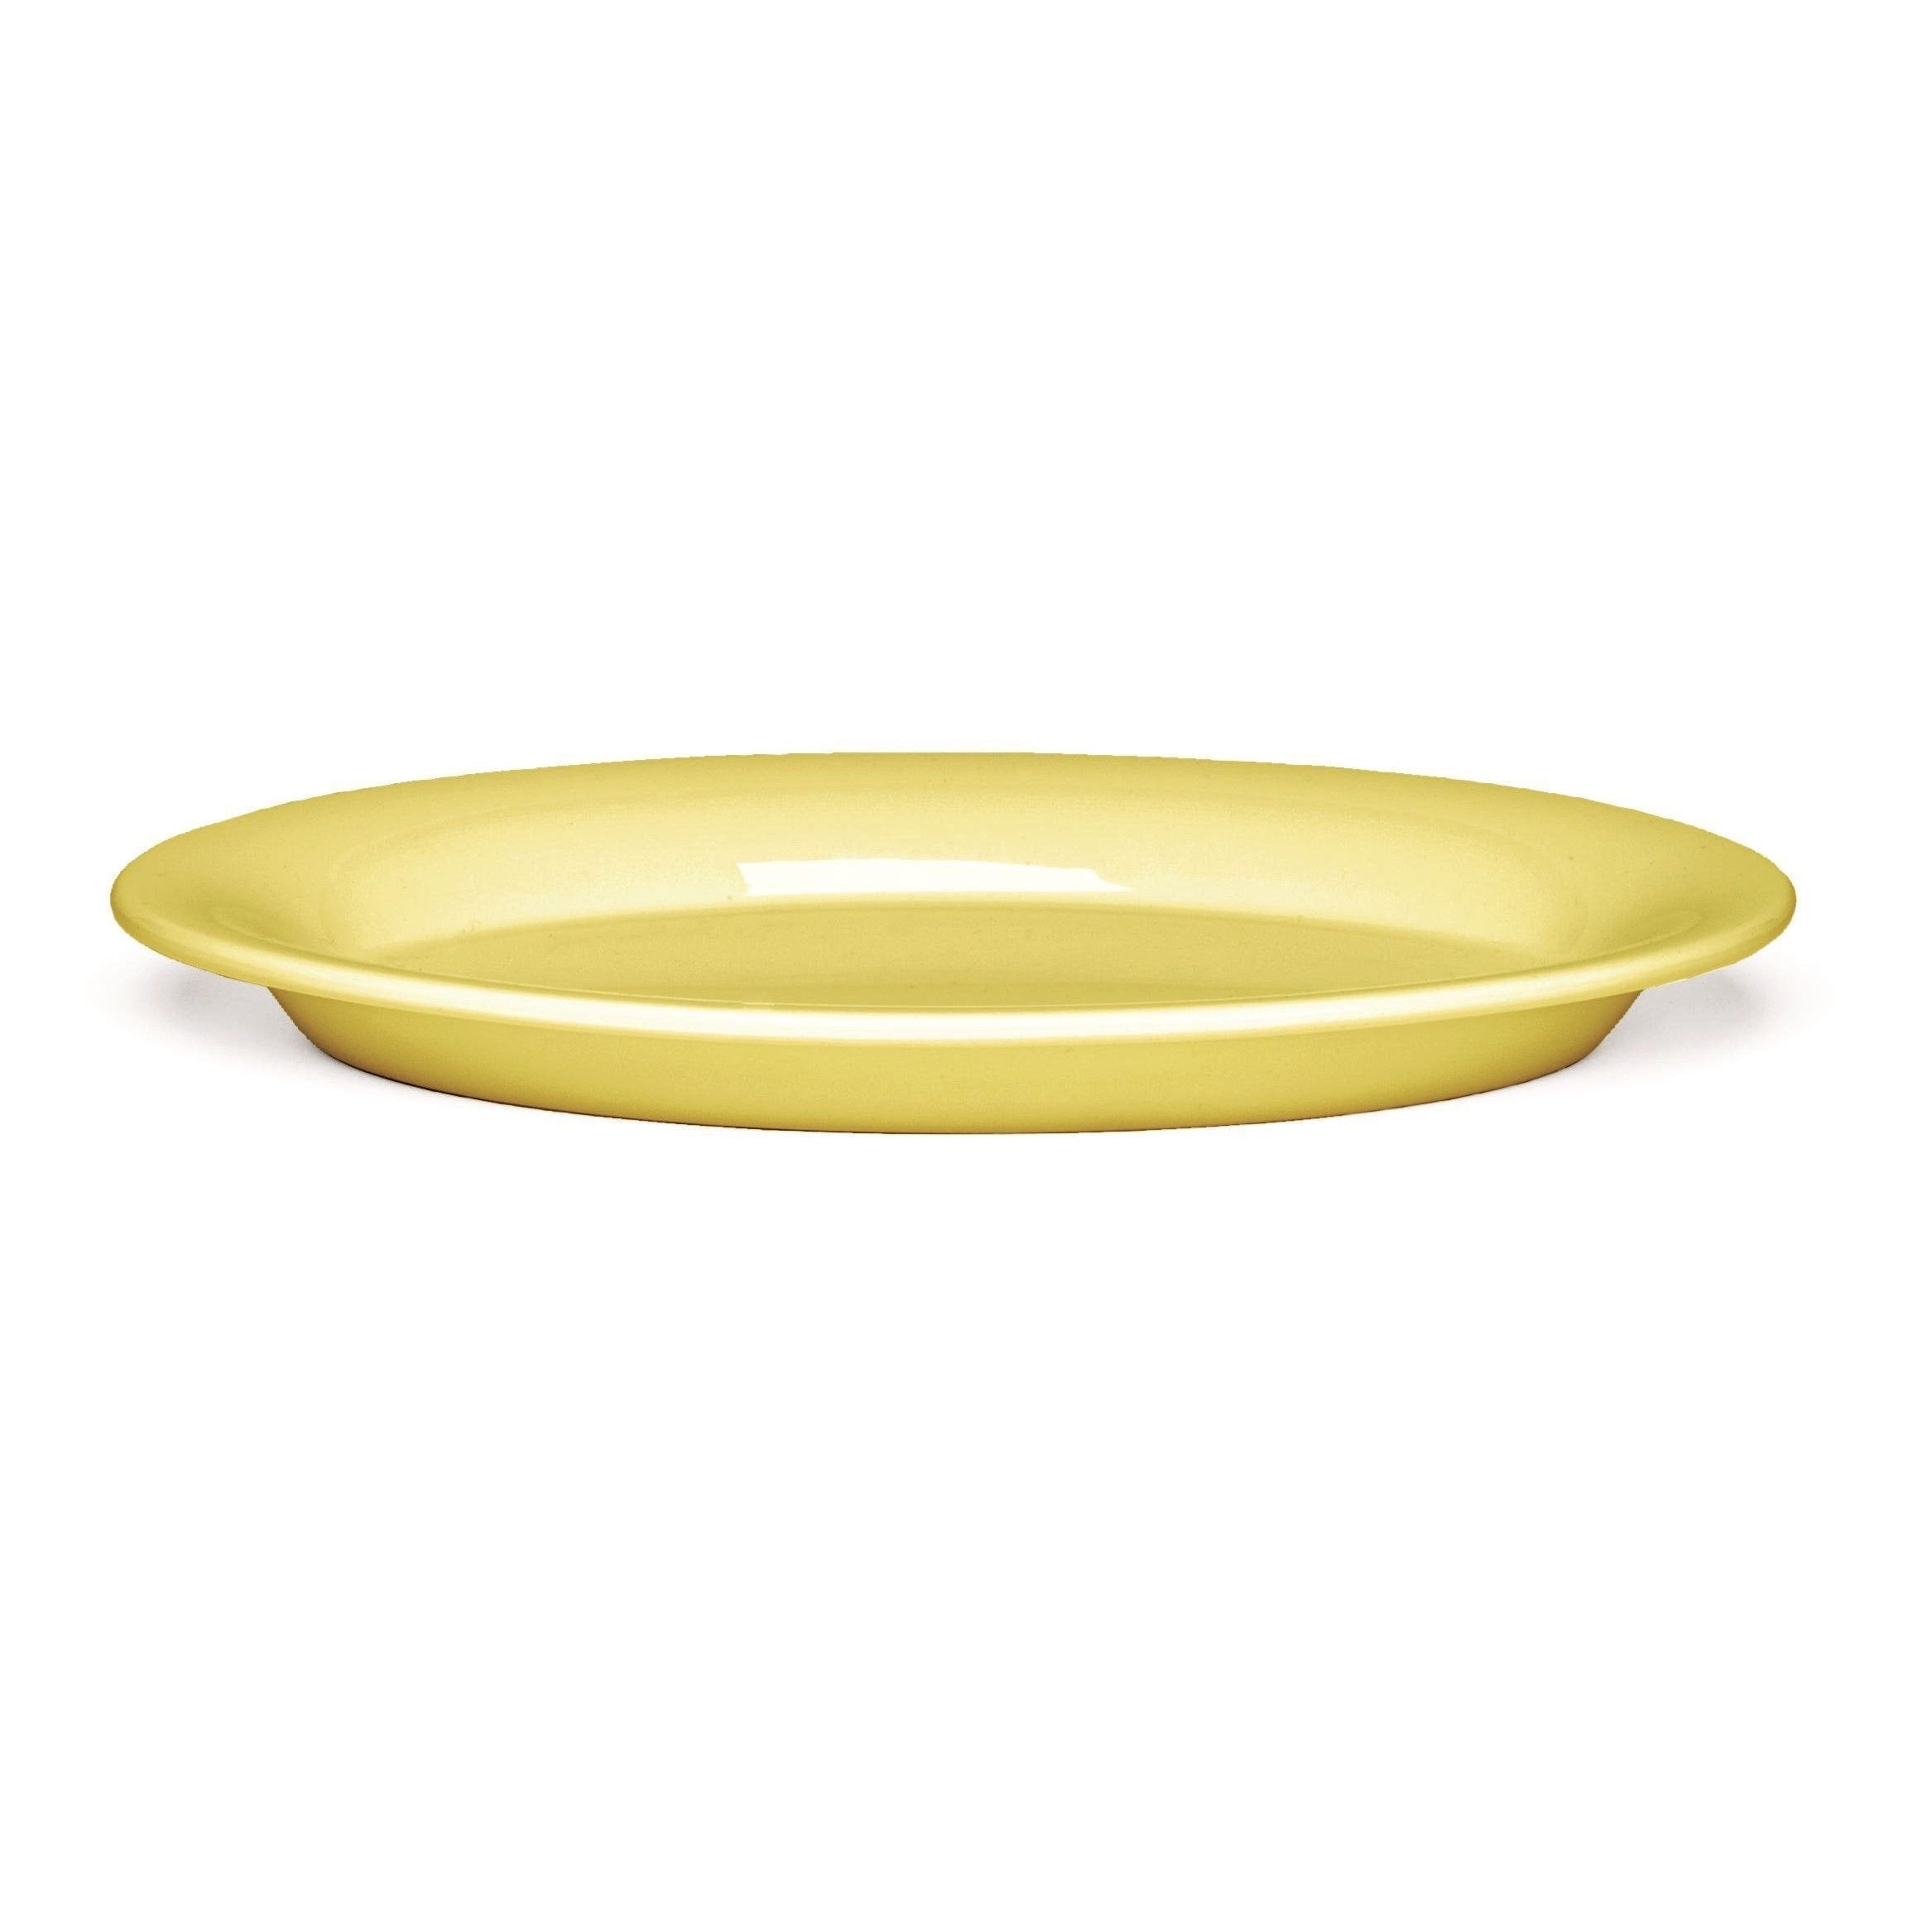 Kähler Ursula Plate Yellow, ø28 Cm